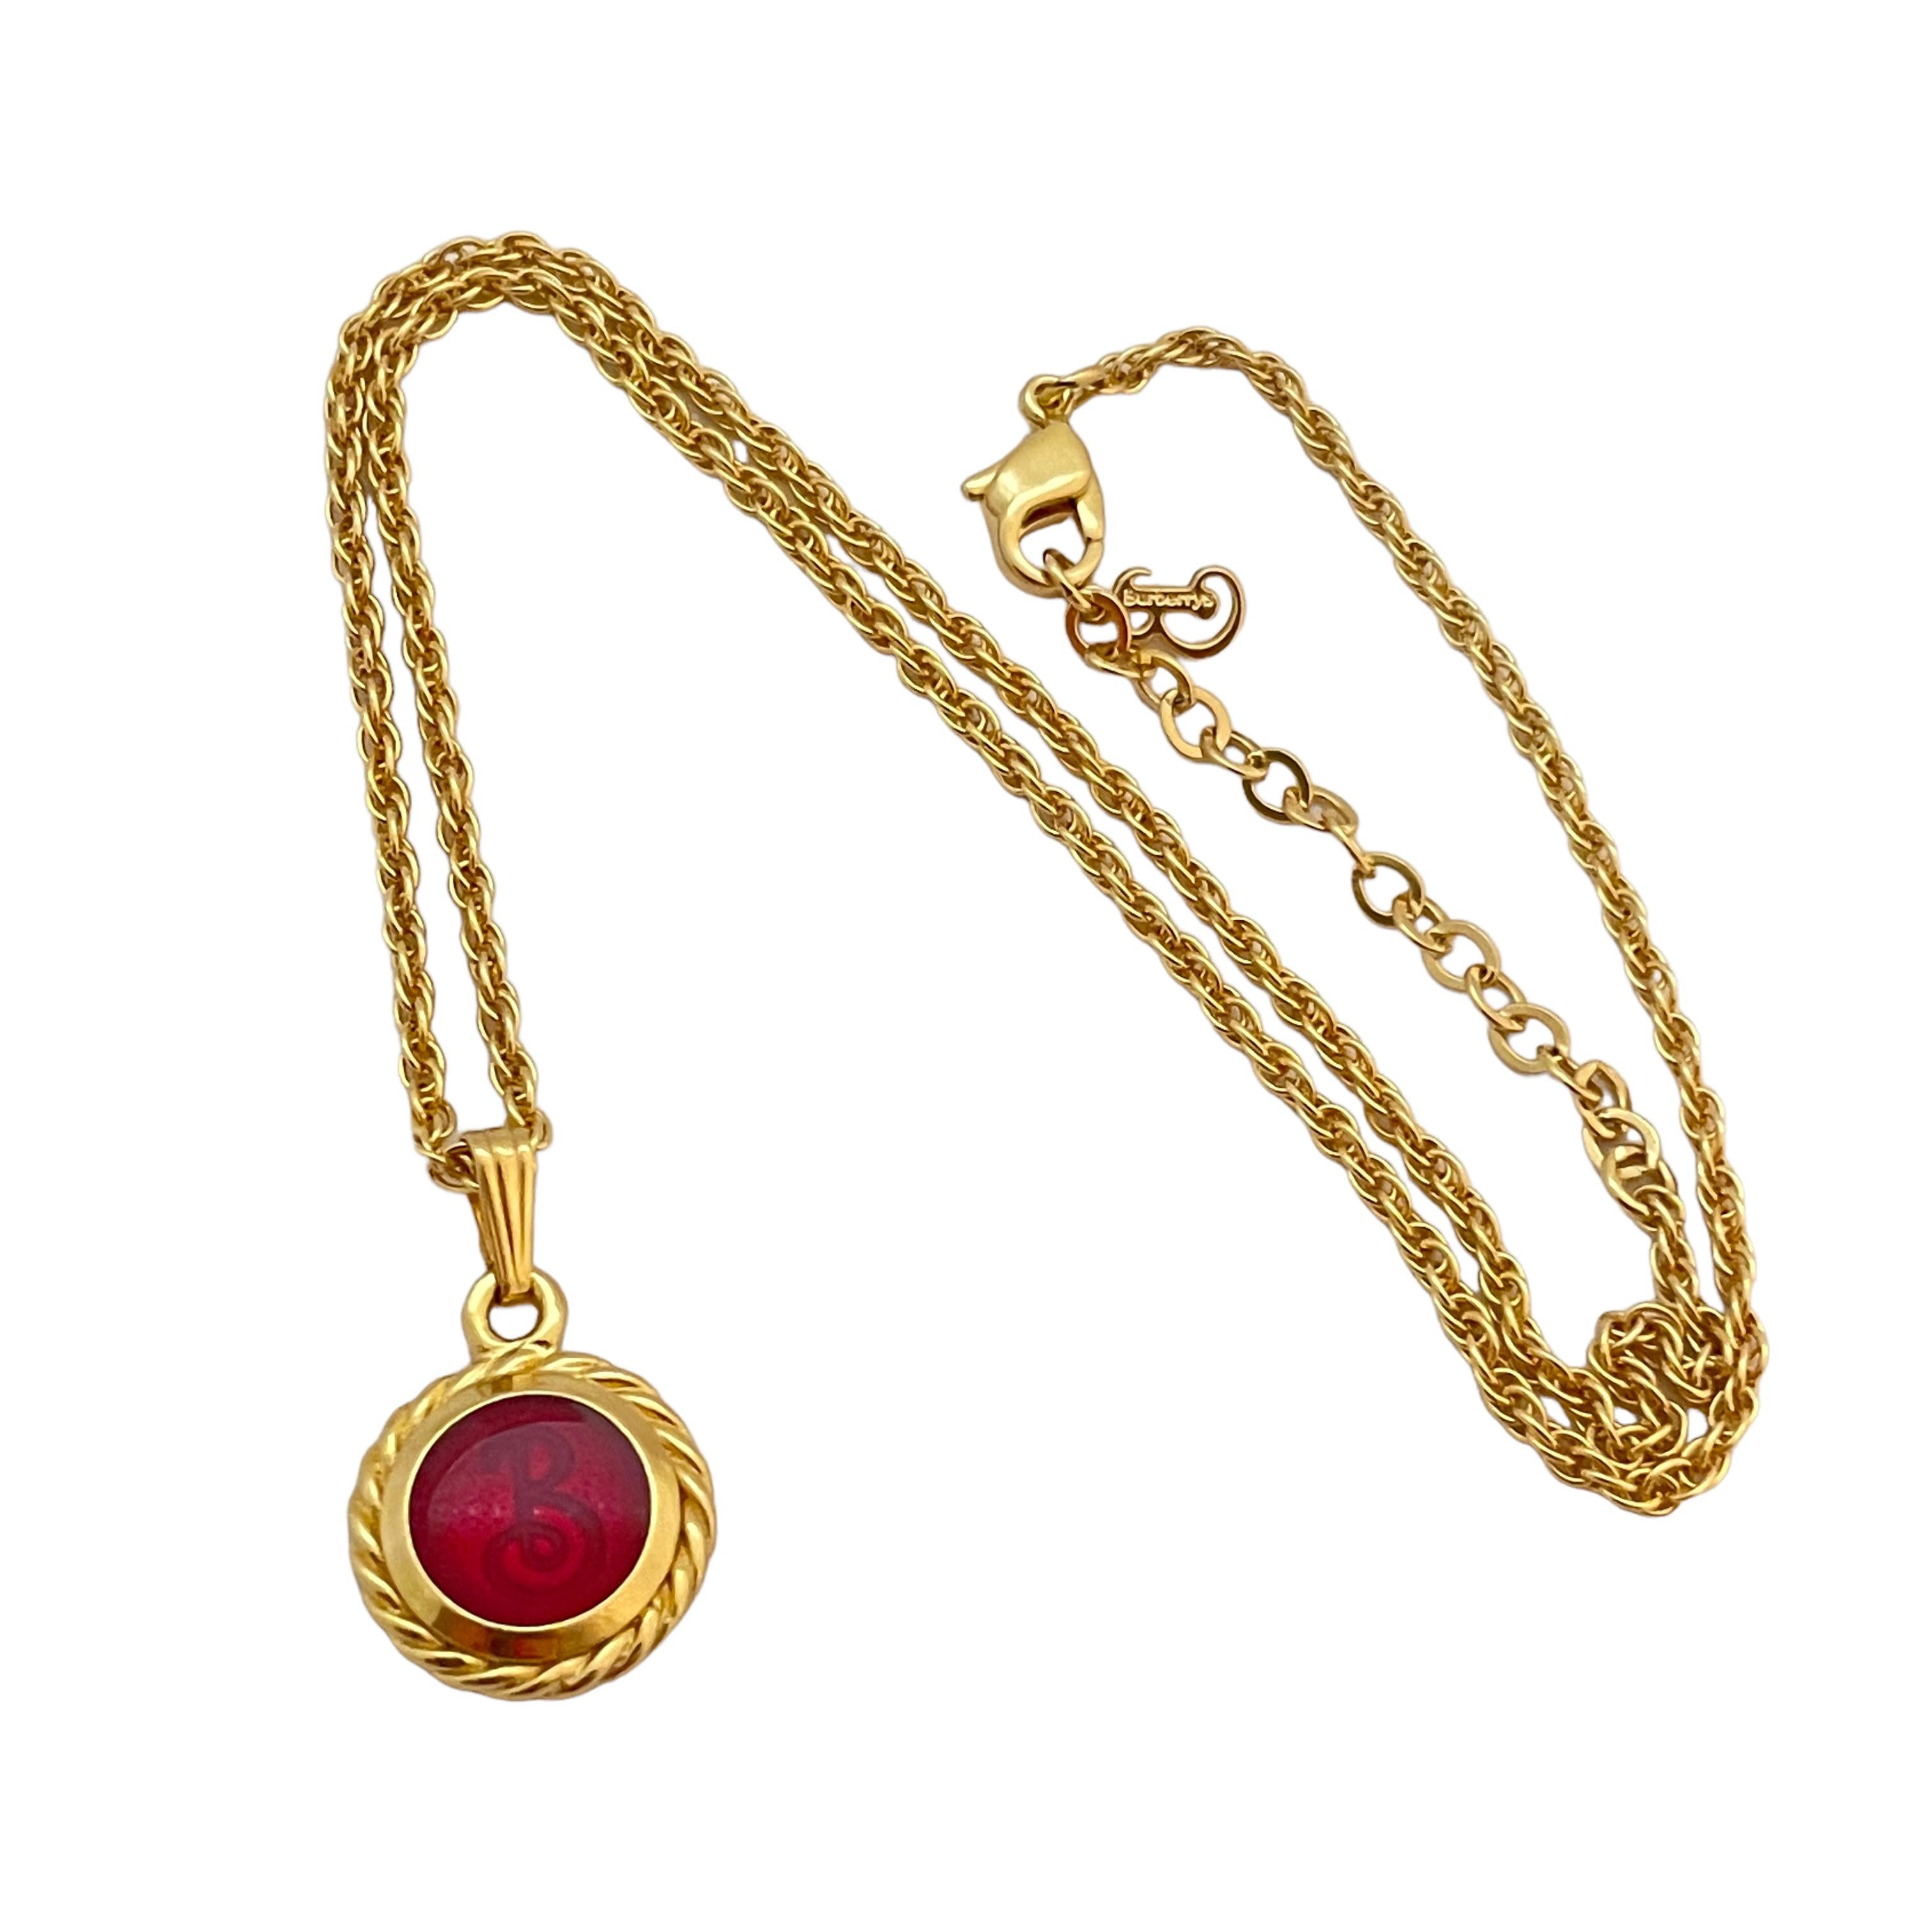 DETAILS

• signed BURBERRY'S 

• gold tone with red 

• vintage designer runway necklace

MEASUREMENTS

• 17